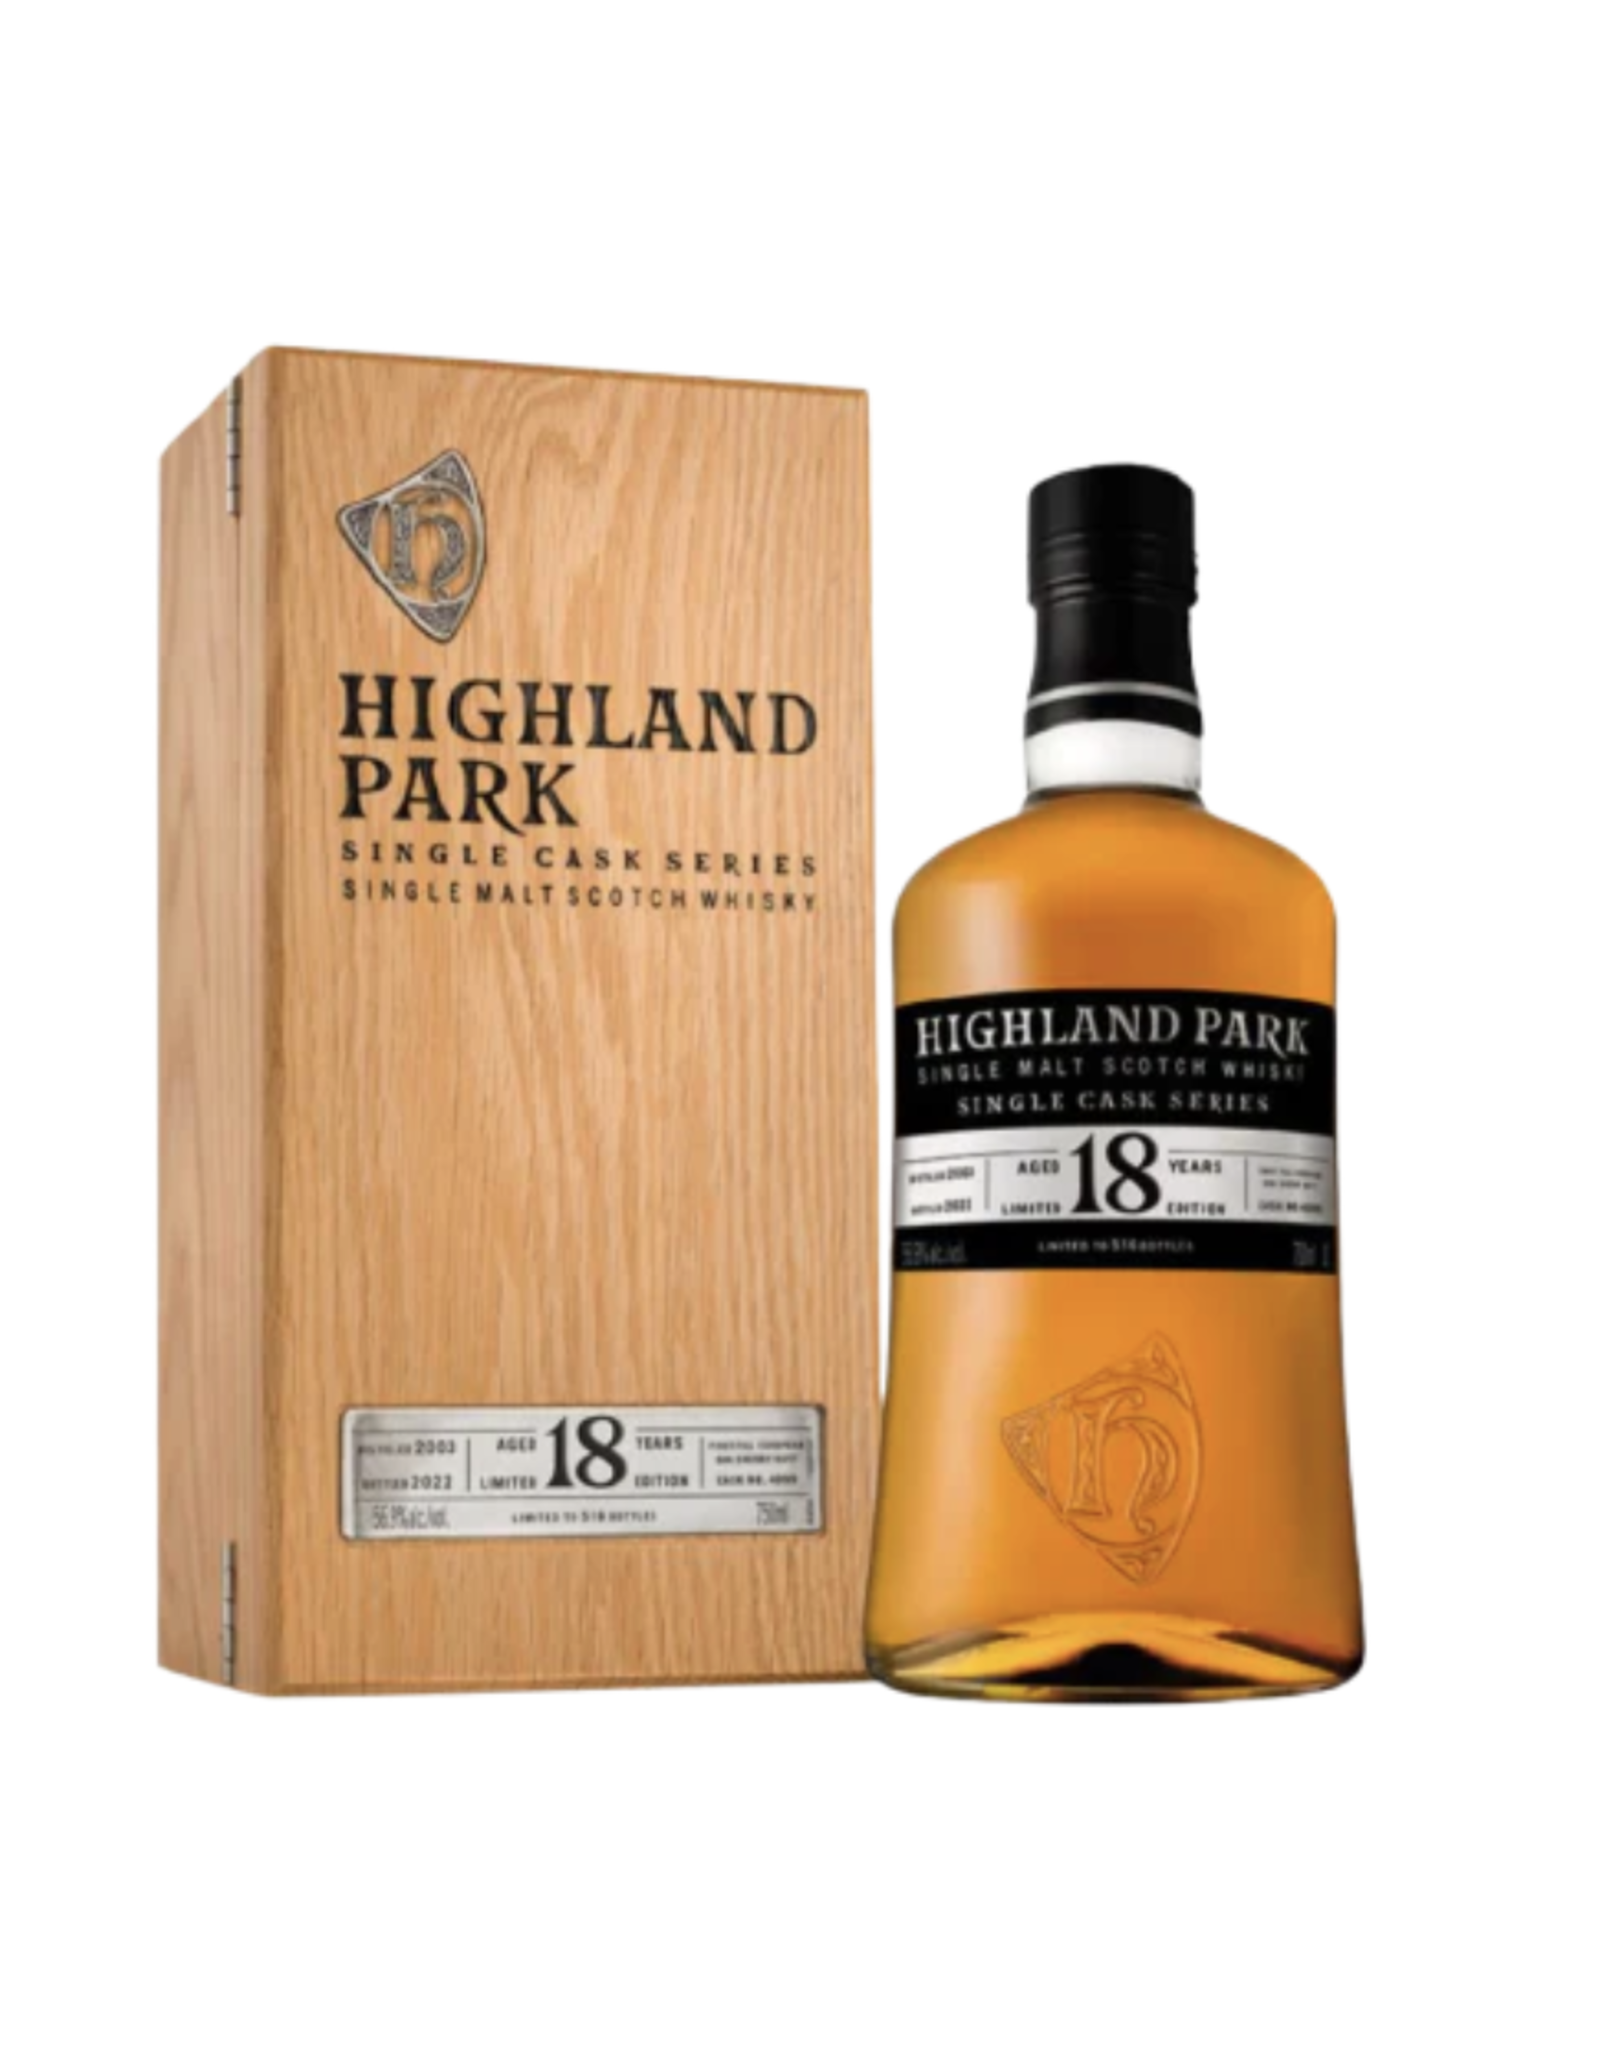 Highland Park 2003 Highland Park Single Cask Single Malt Scotch Whisky 18Yr Limited Edition